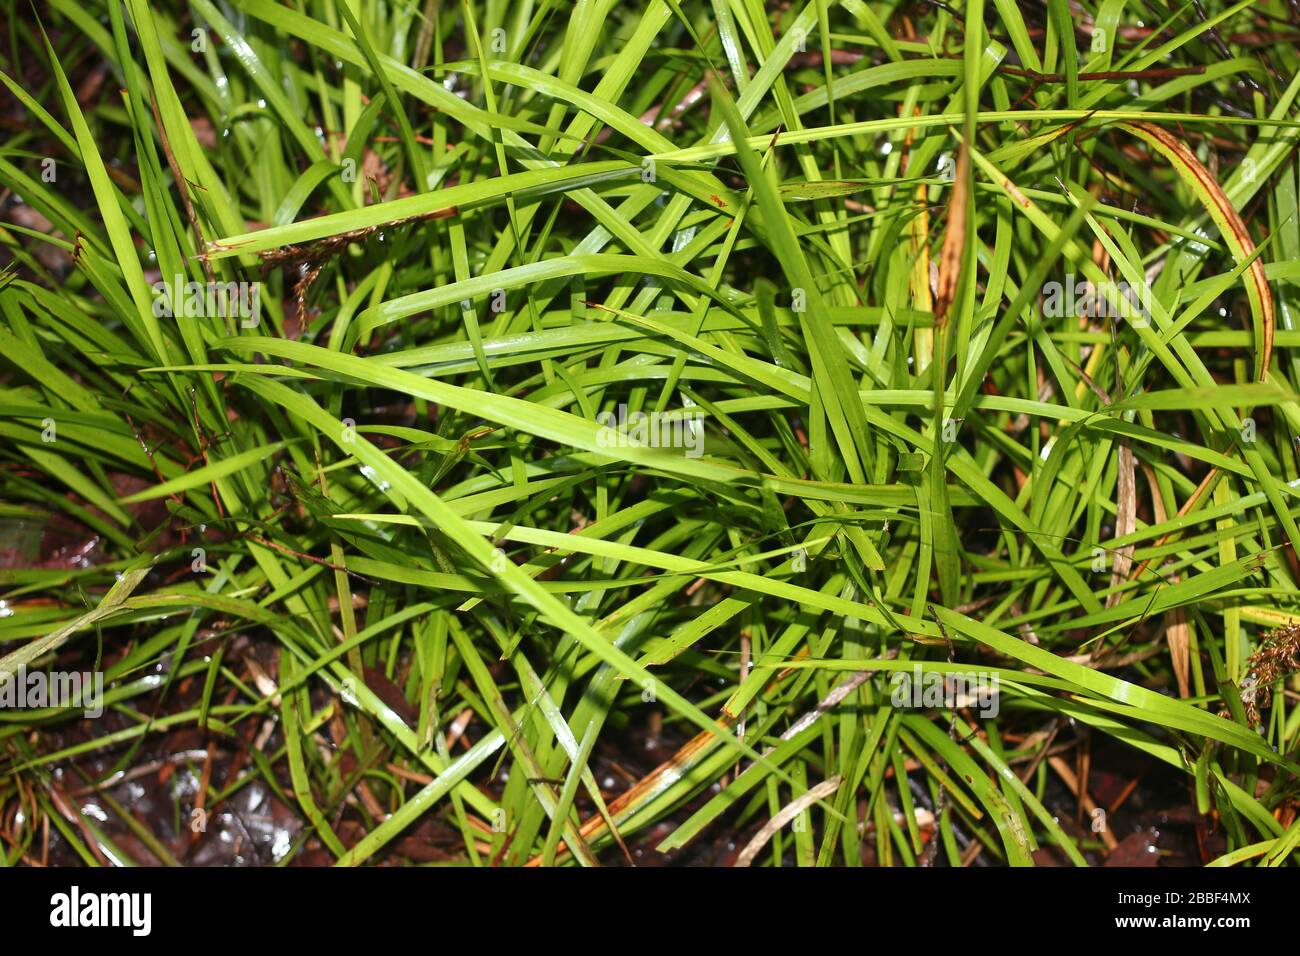 Sword grass wild ground cover in Western Australia Stock Photo